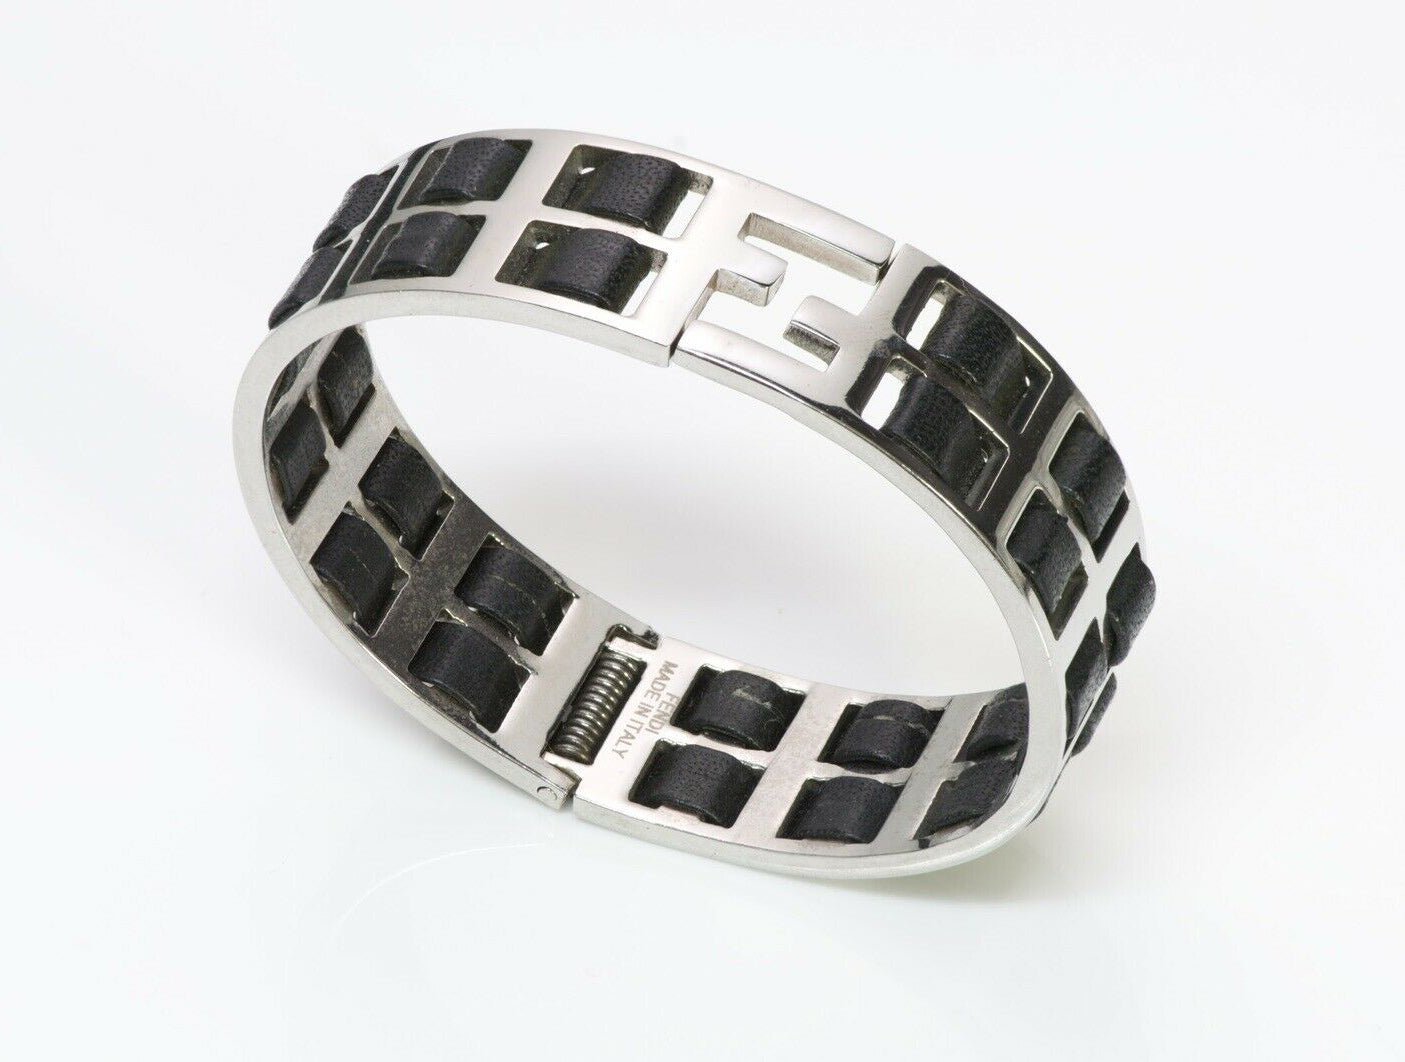 FENDI “Fendista” Wide Black Leather Bangle Bracelet